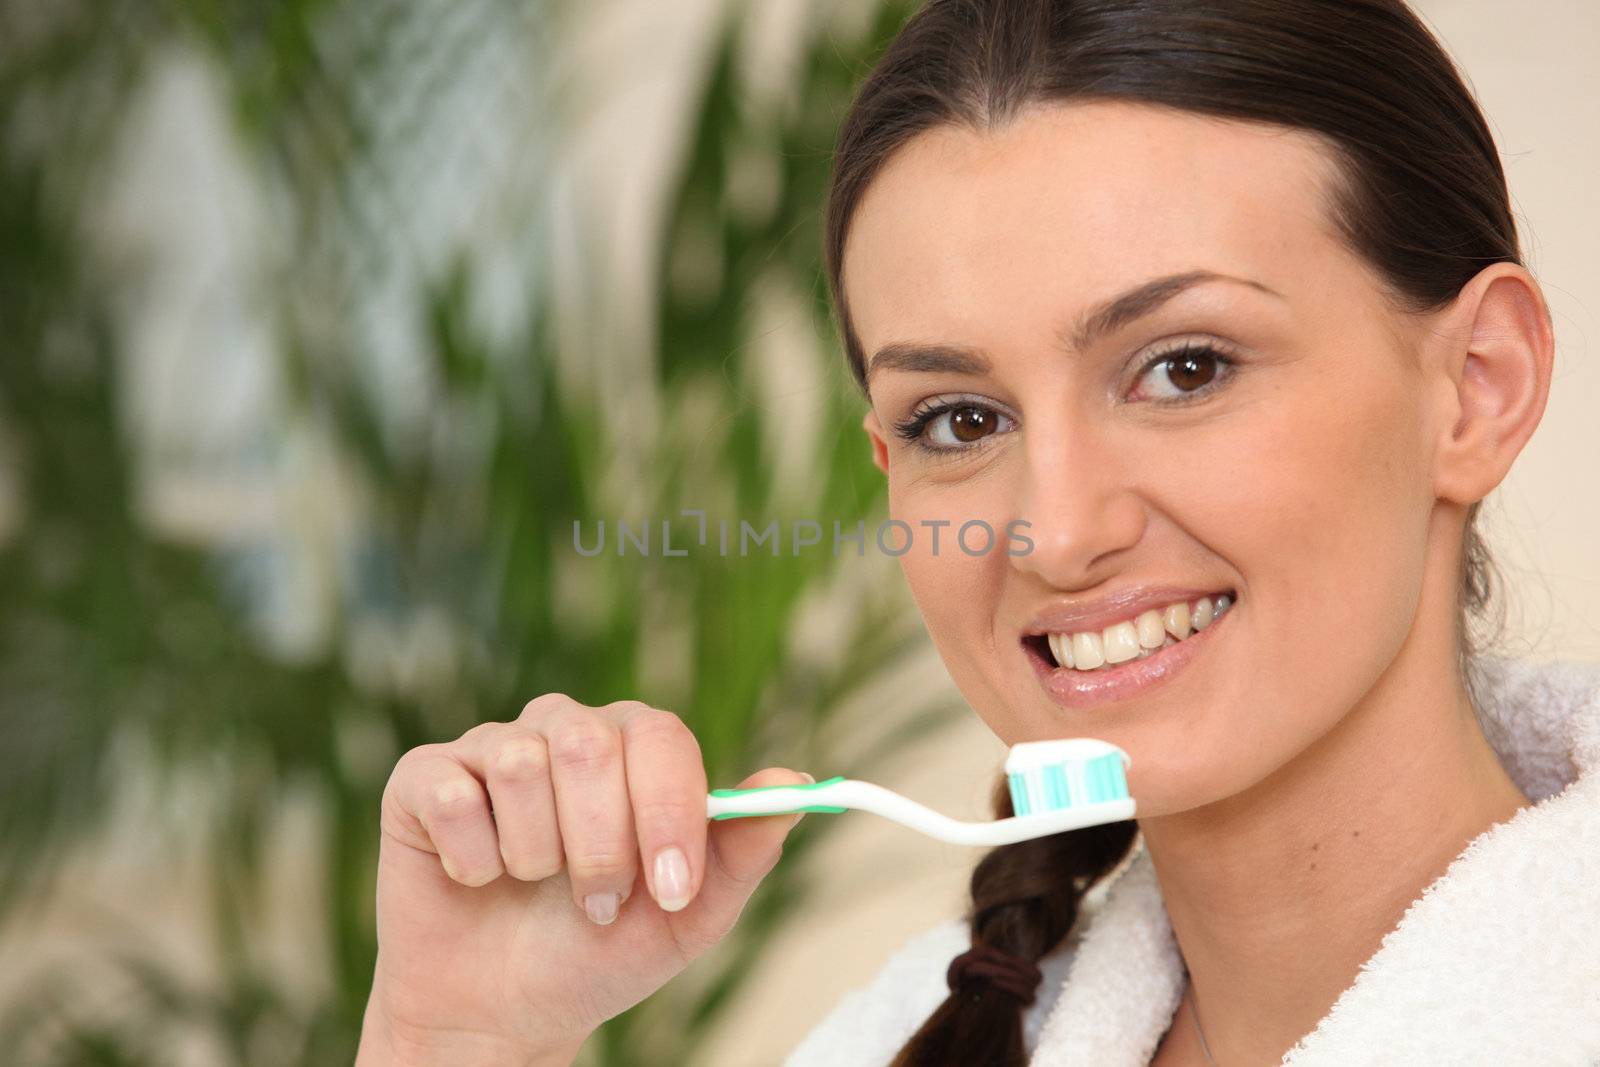 Brown-haired woman brushing teeth